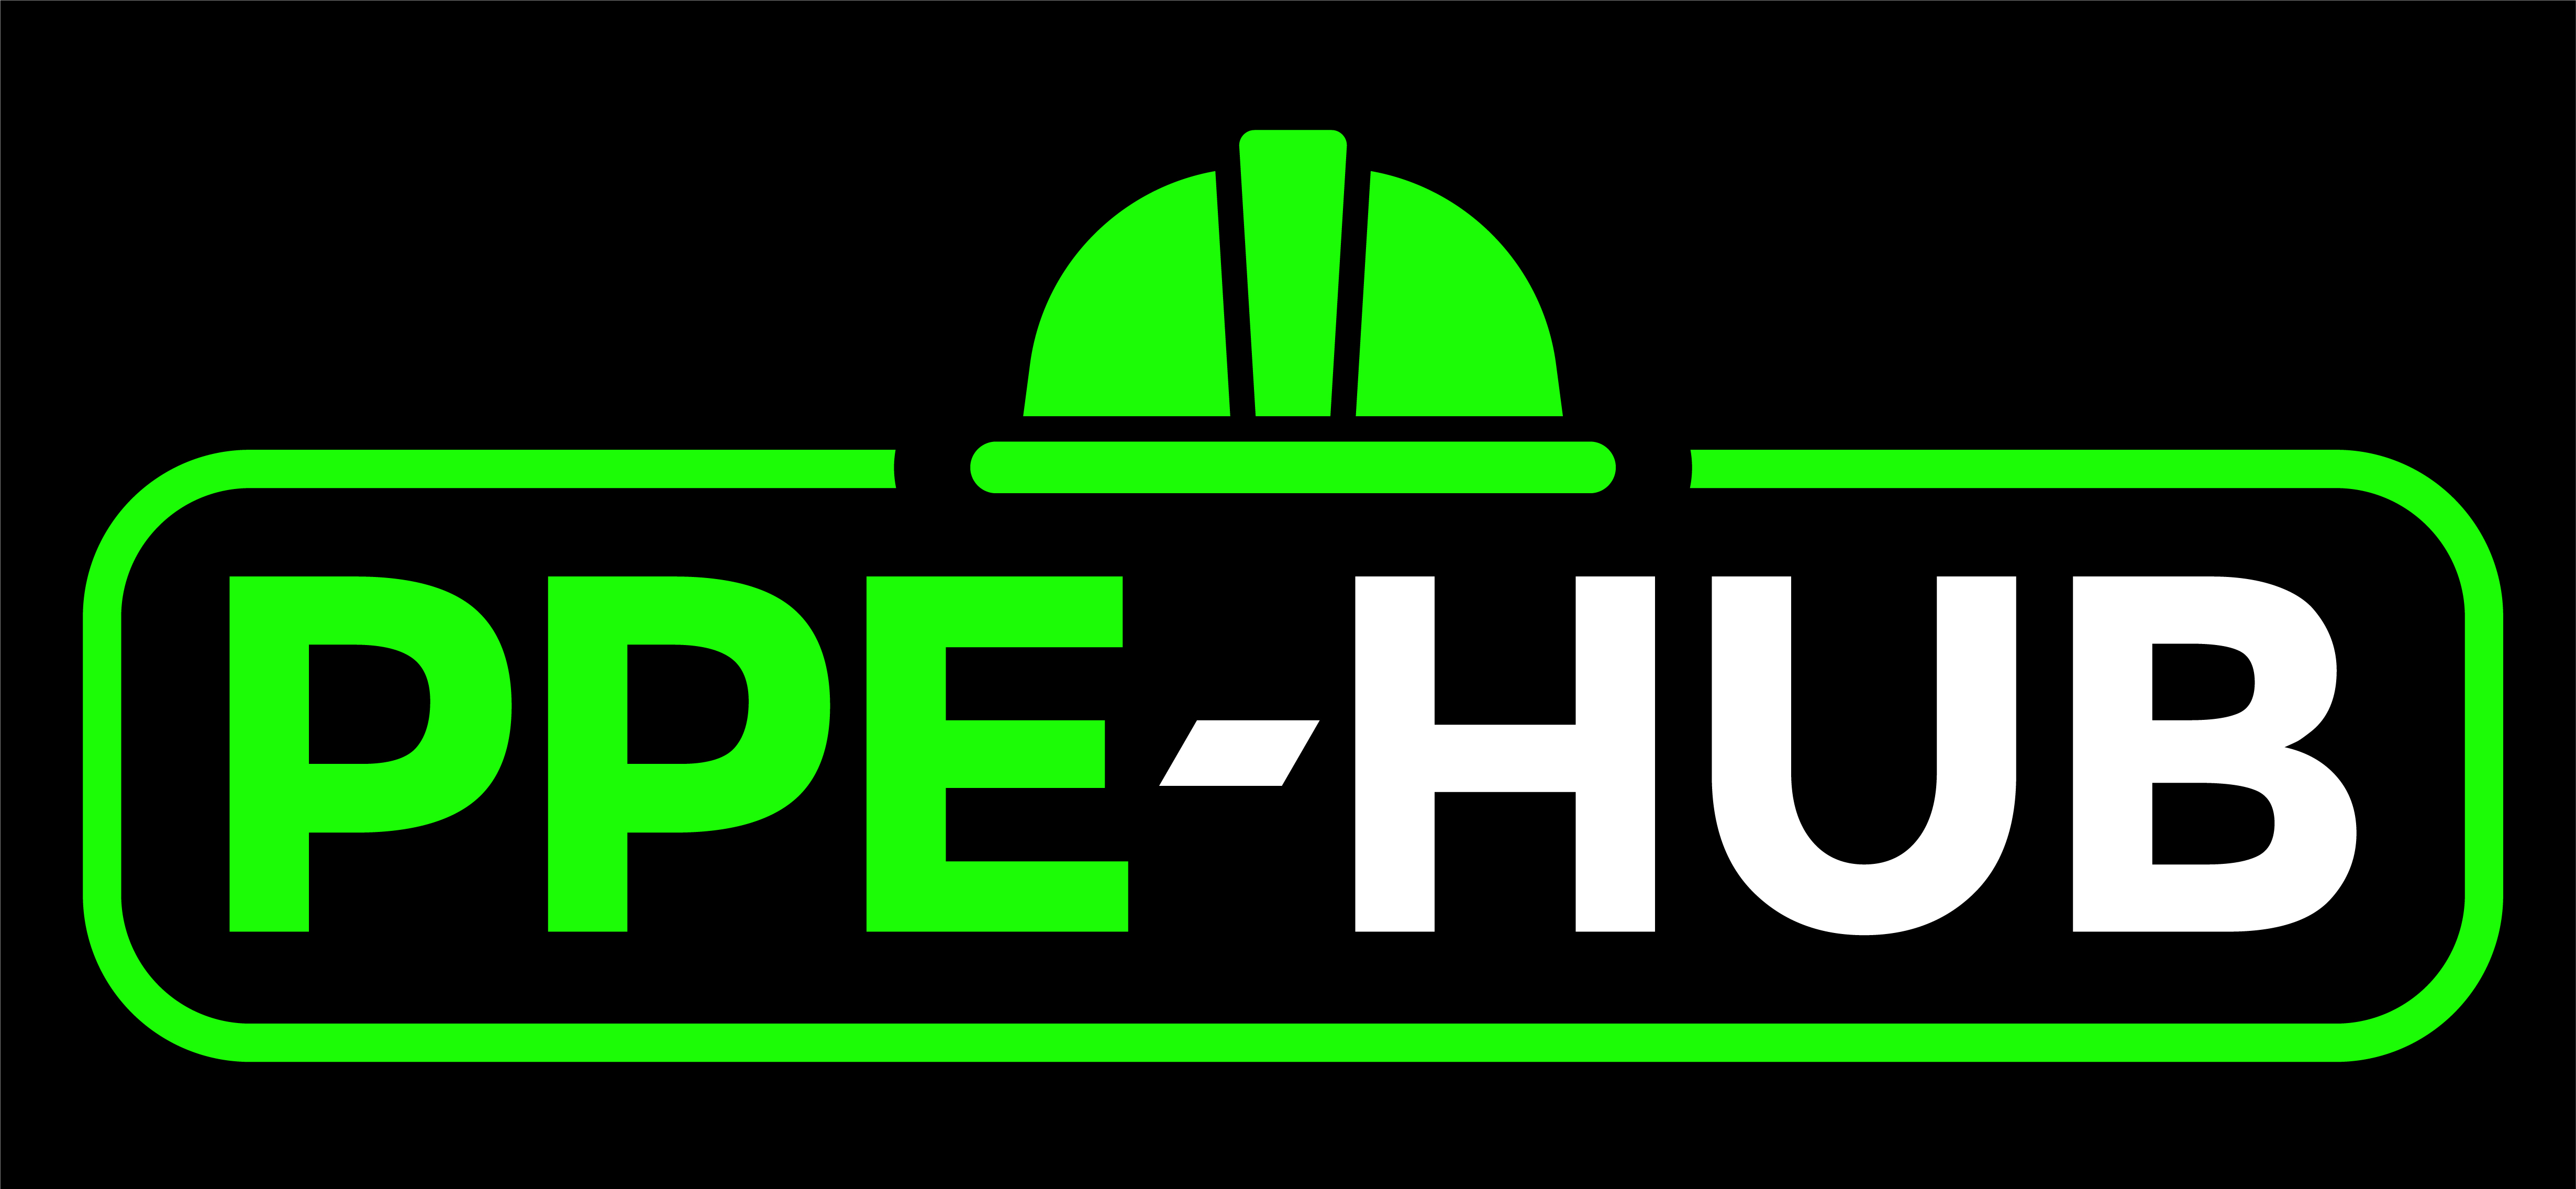 PPE HUB logo